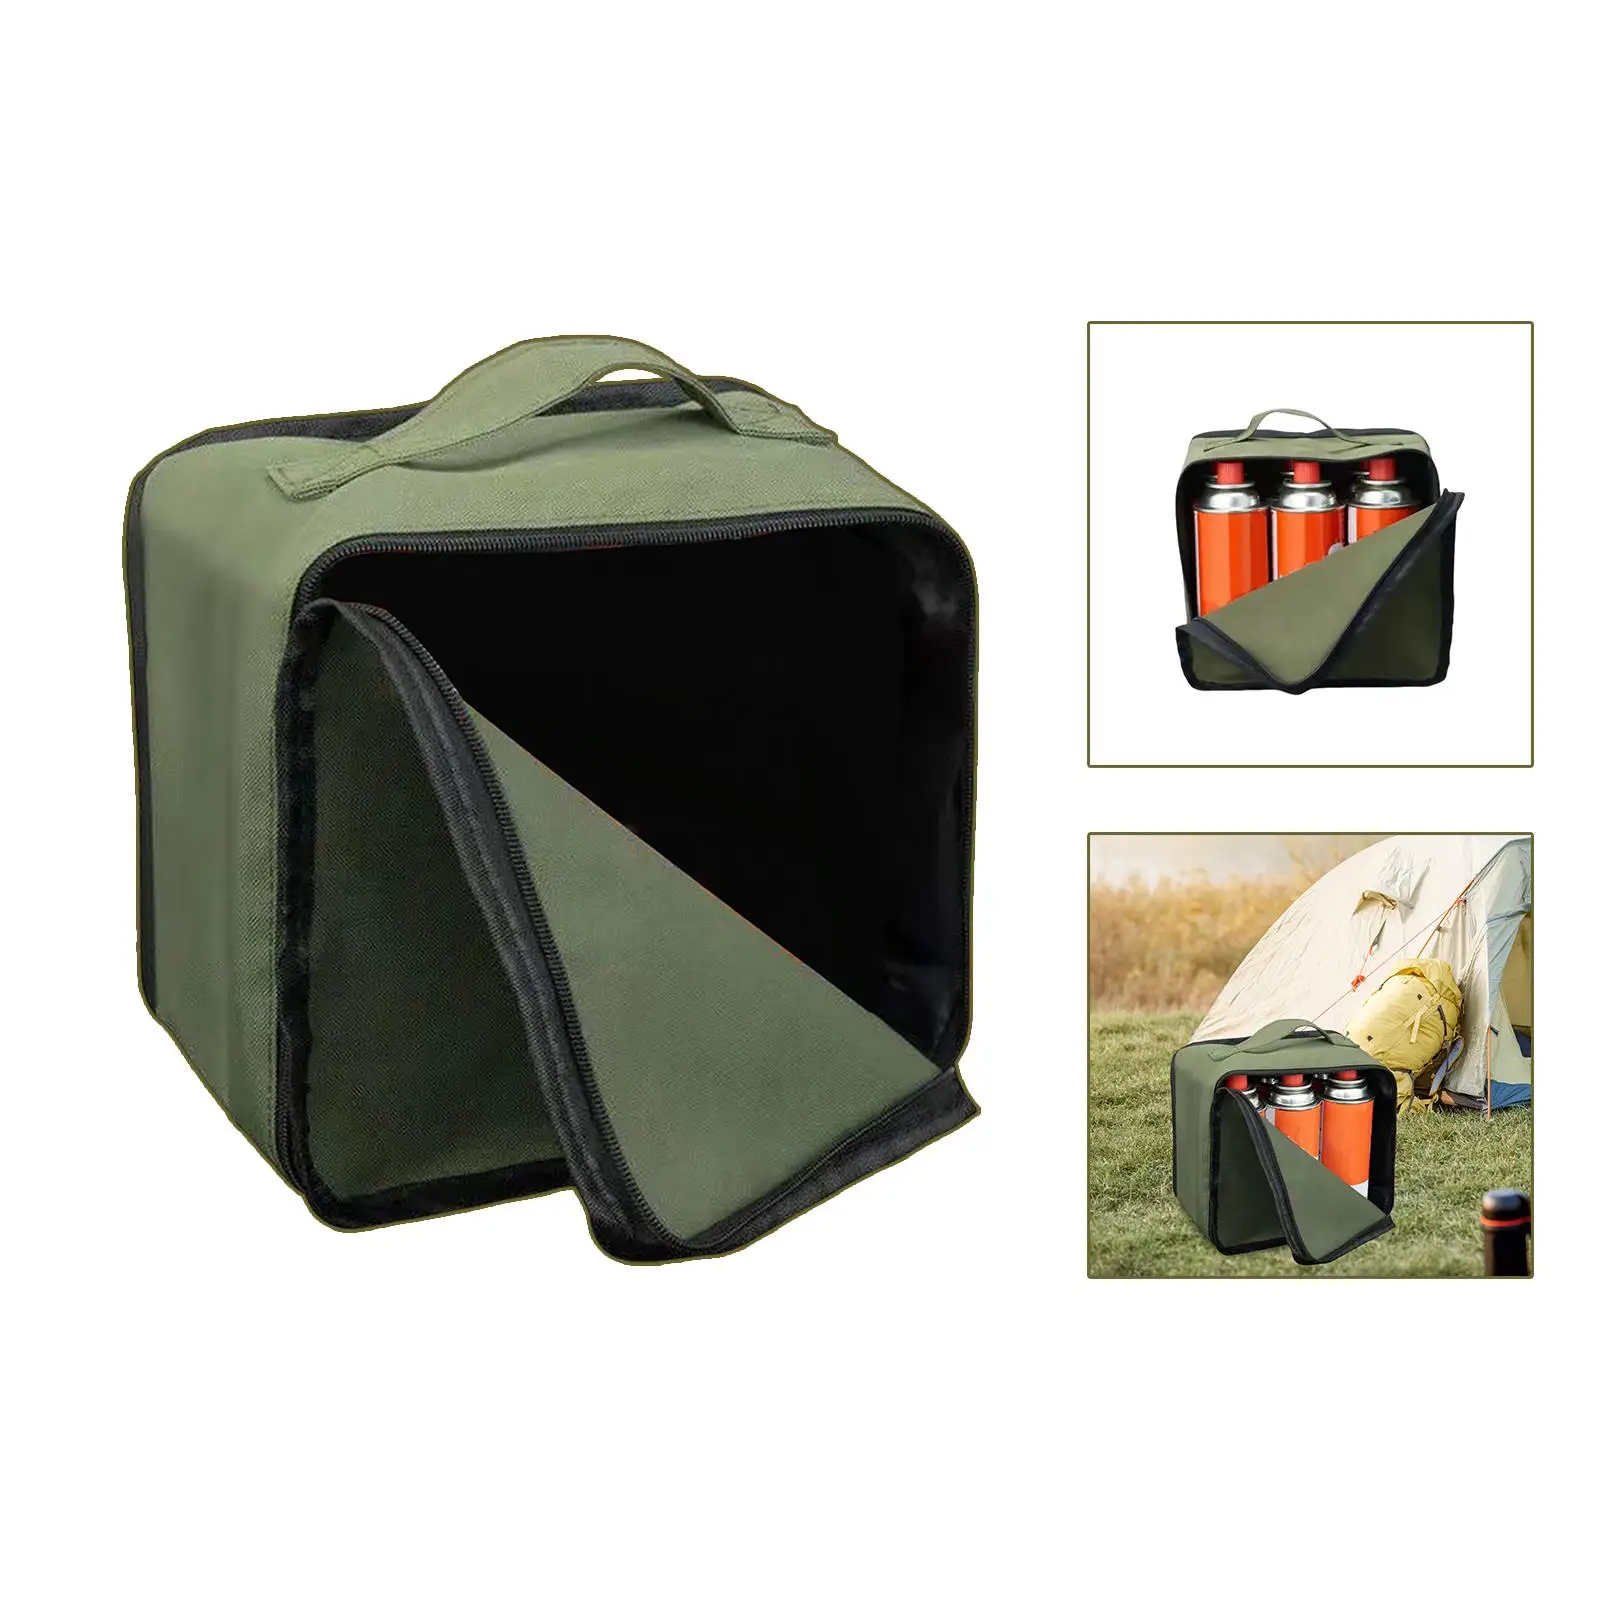 Gas Tank Storage Bags Utensils Bag Durable Organizer Stable Protect Bag Large